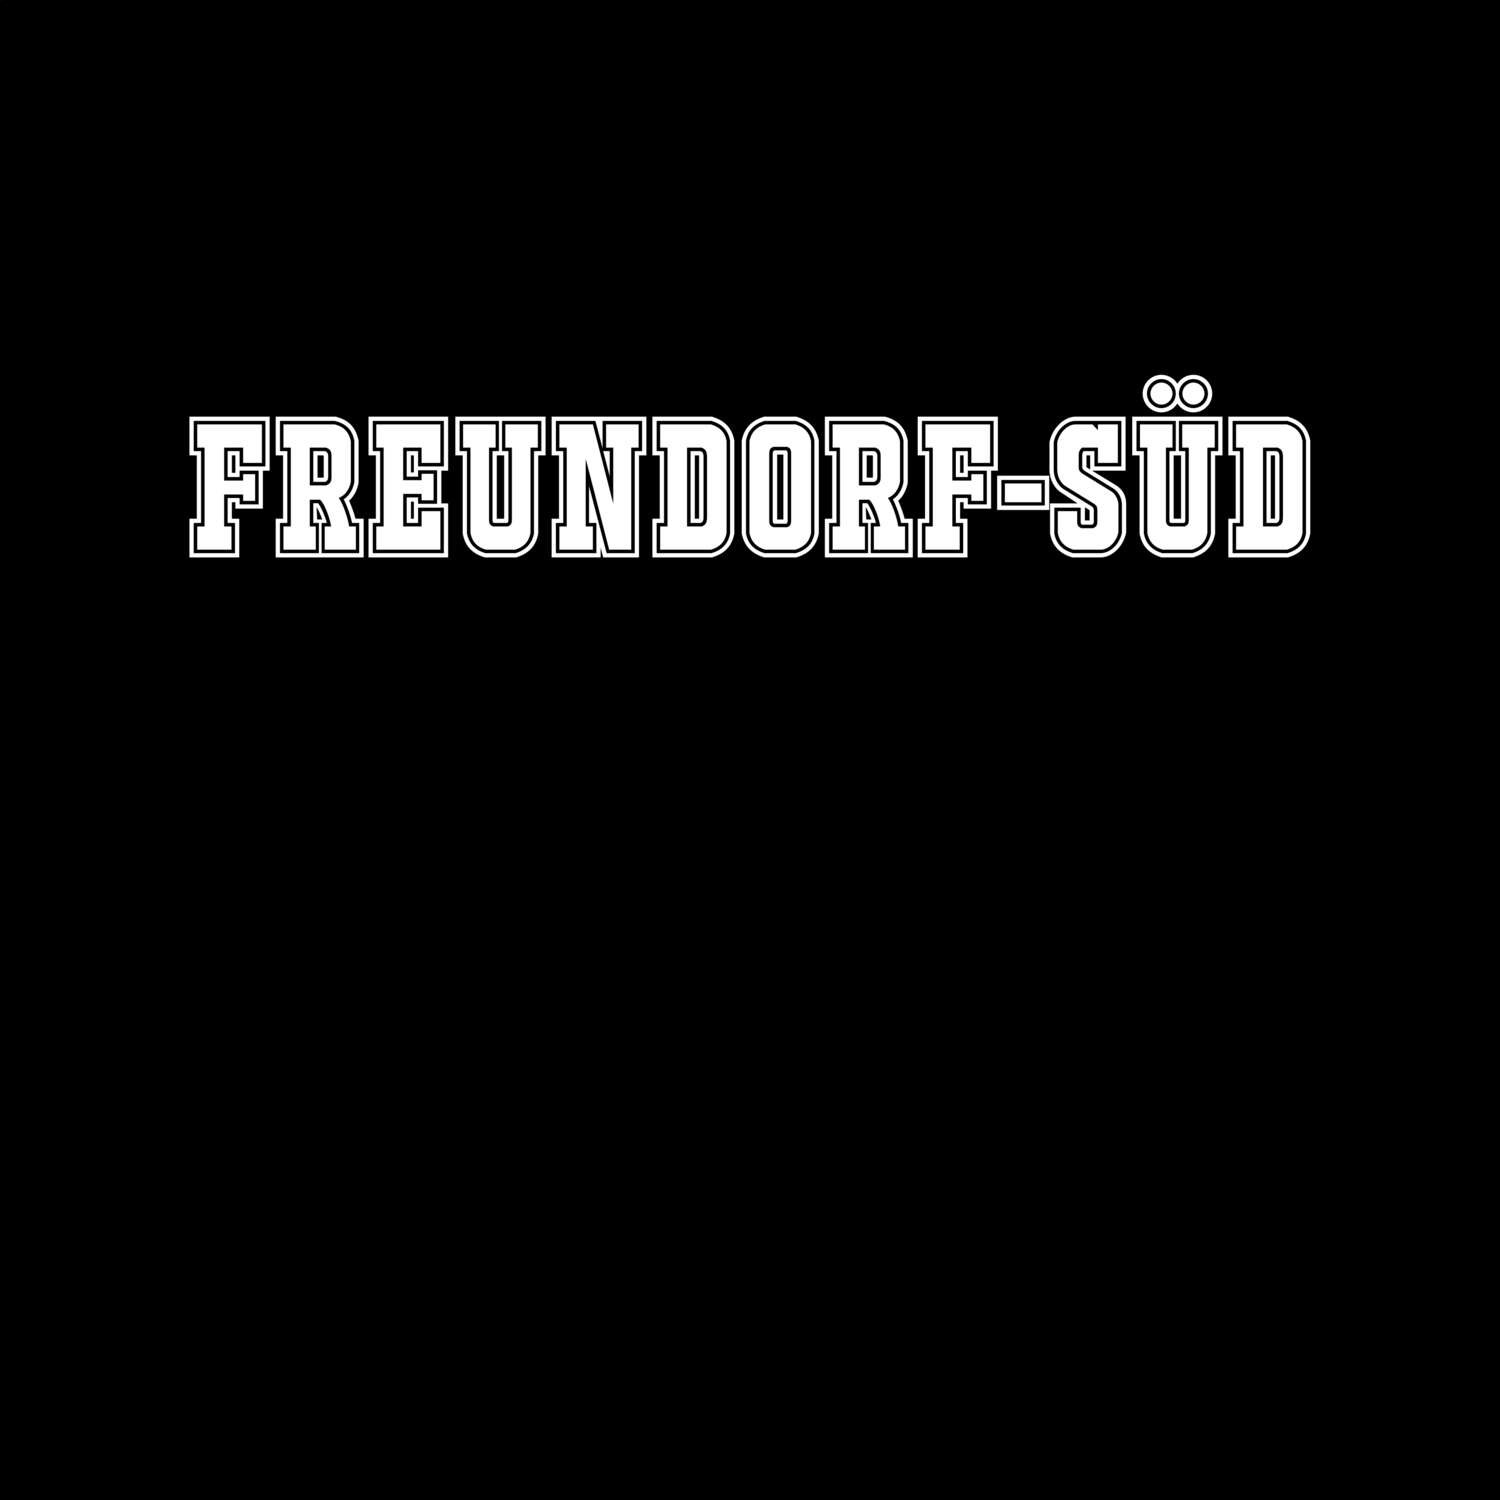 Freundorf-Süd T-Shirt »Classic«